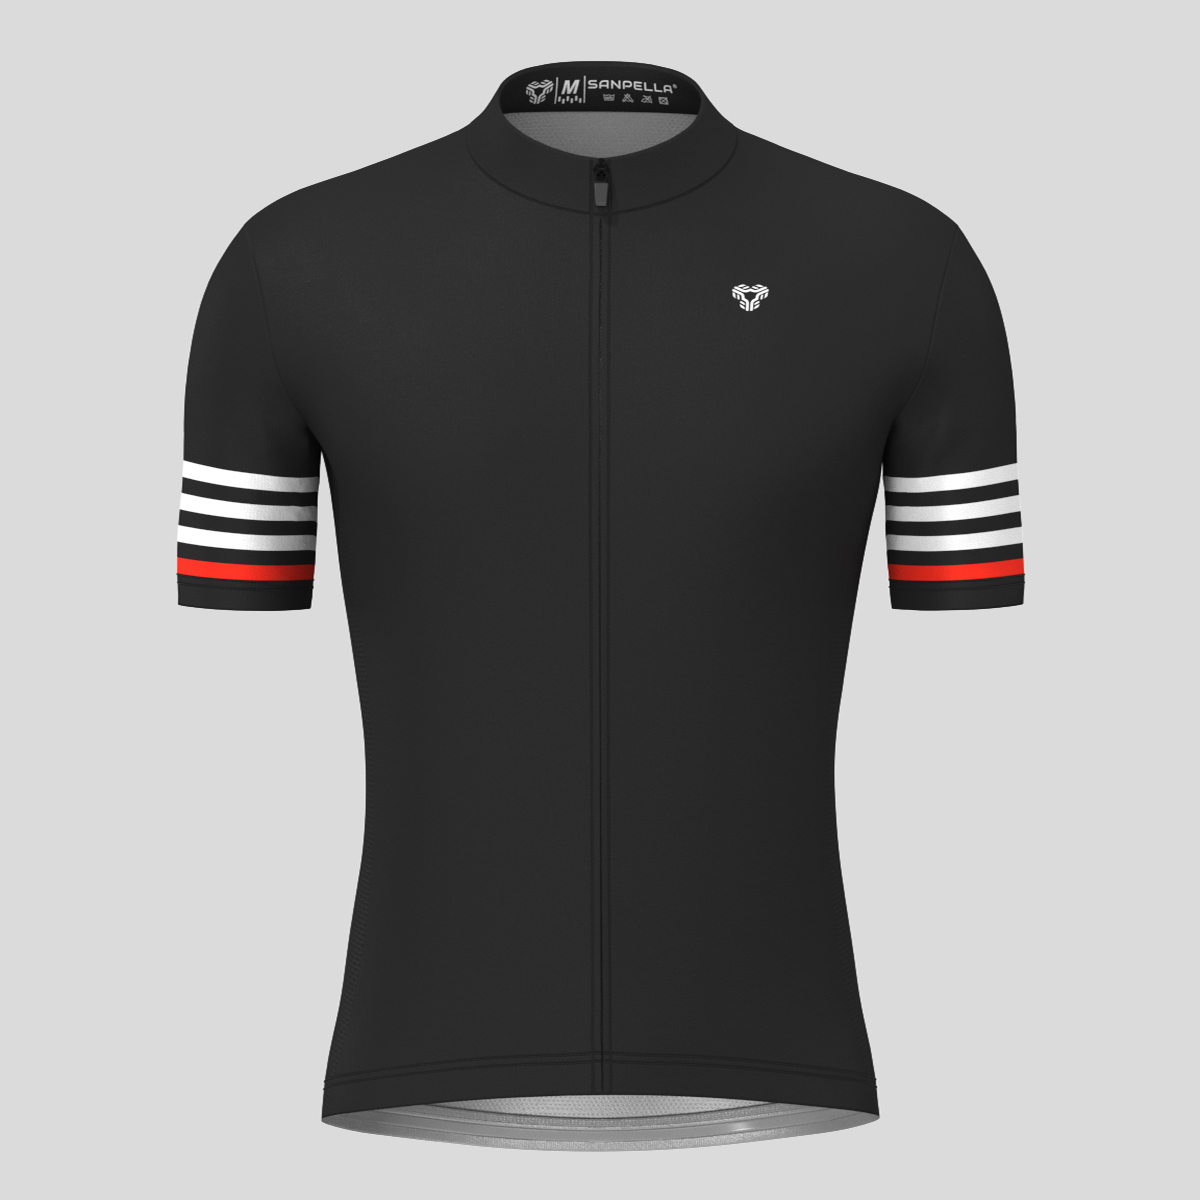 Minimal Stripes Men's Cycling Jersey - Black/White/Red